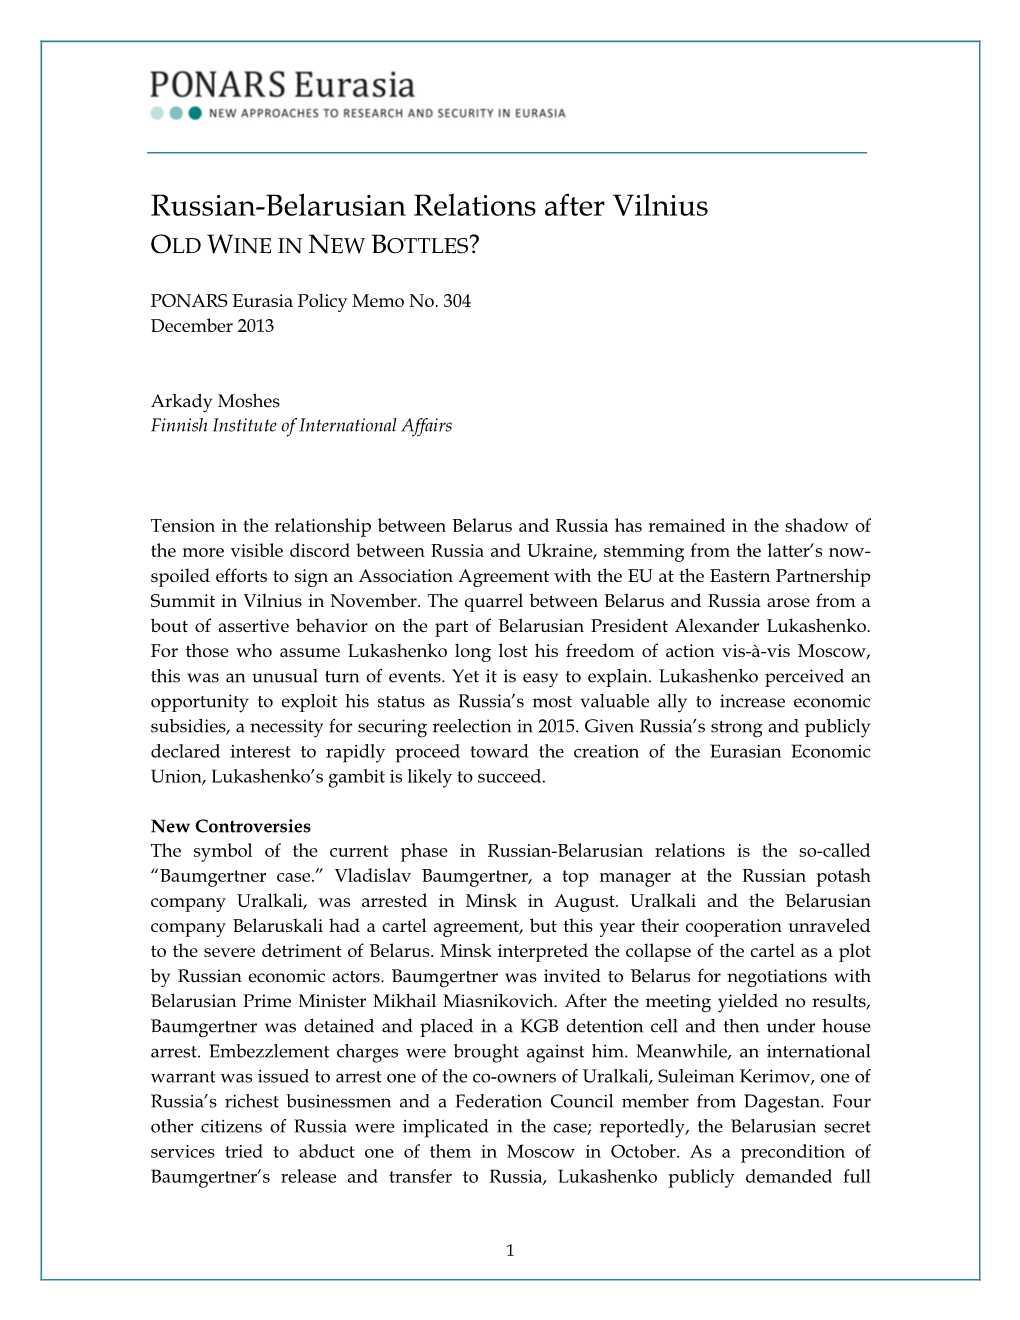 Russian-Belarusian Relations After Vilnius OLD WINE in NEW BOTTLES?